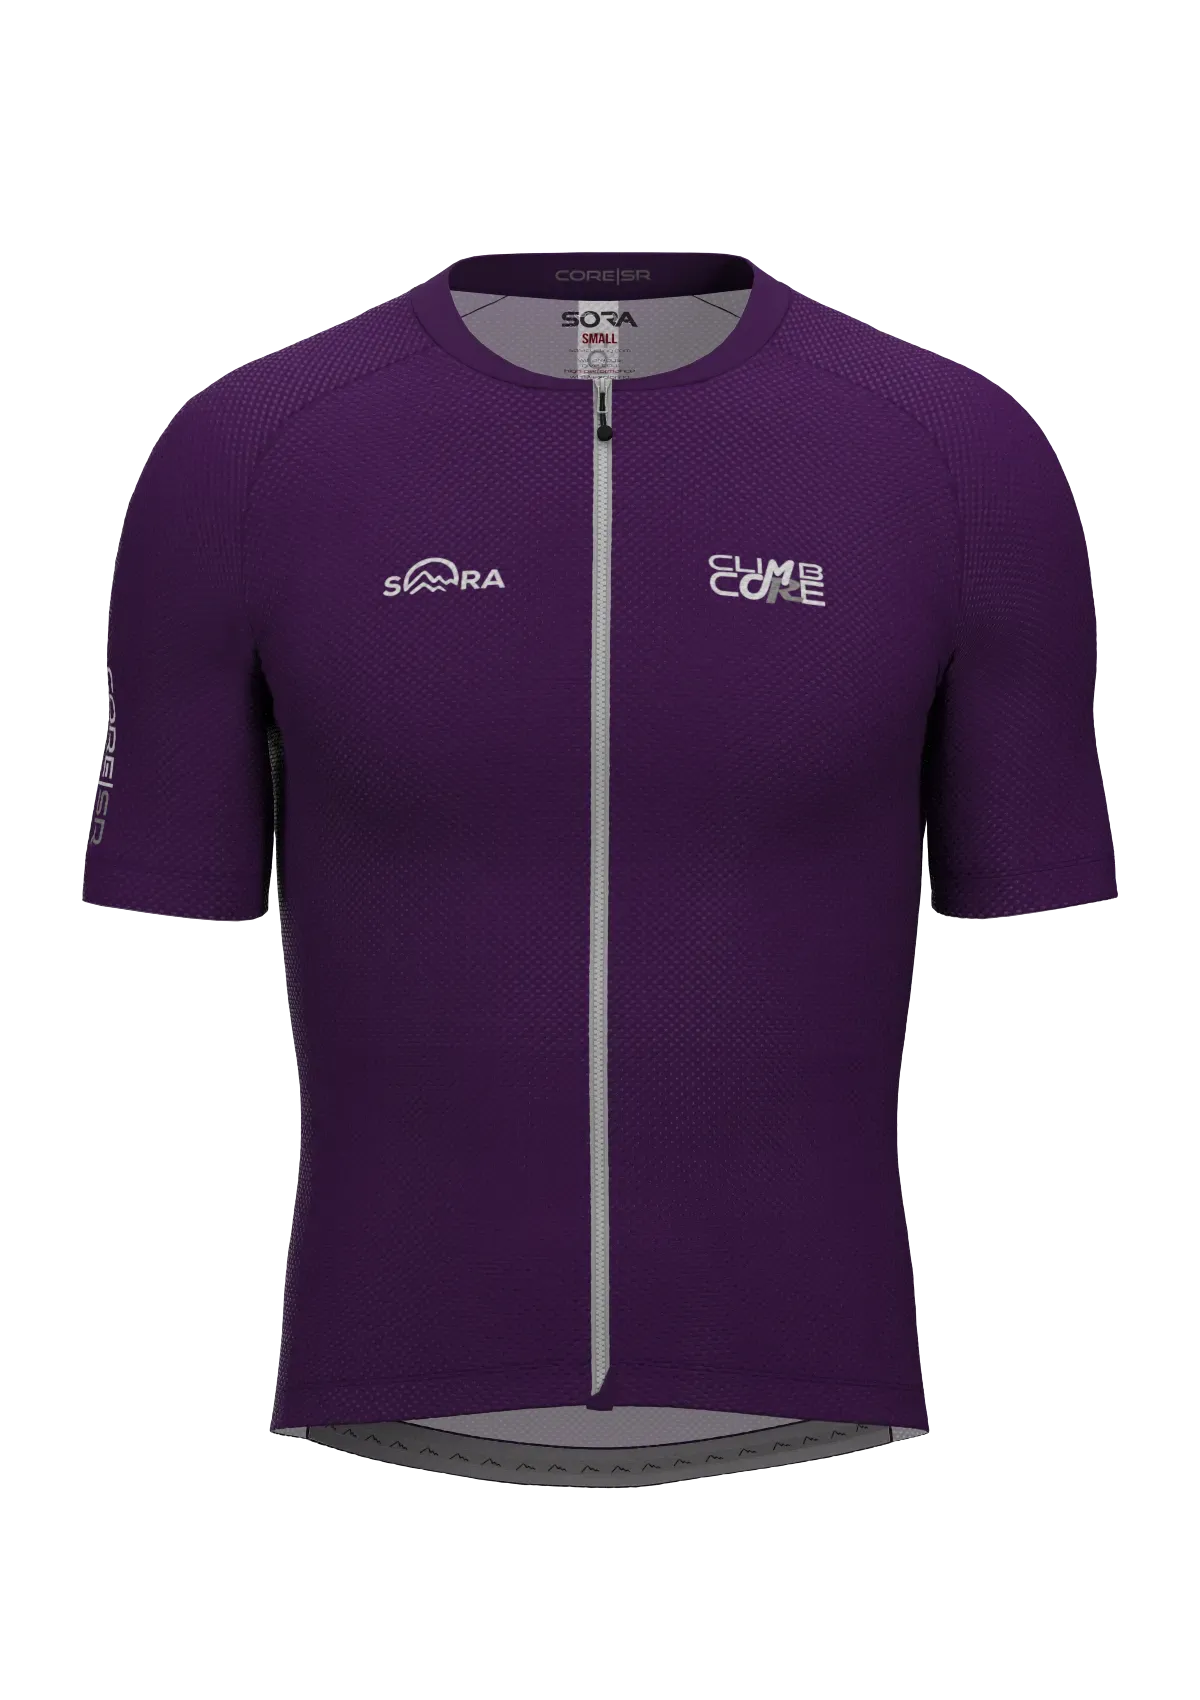 Climb Core 2 cycling jersey